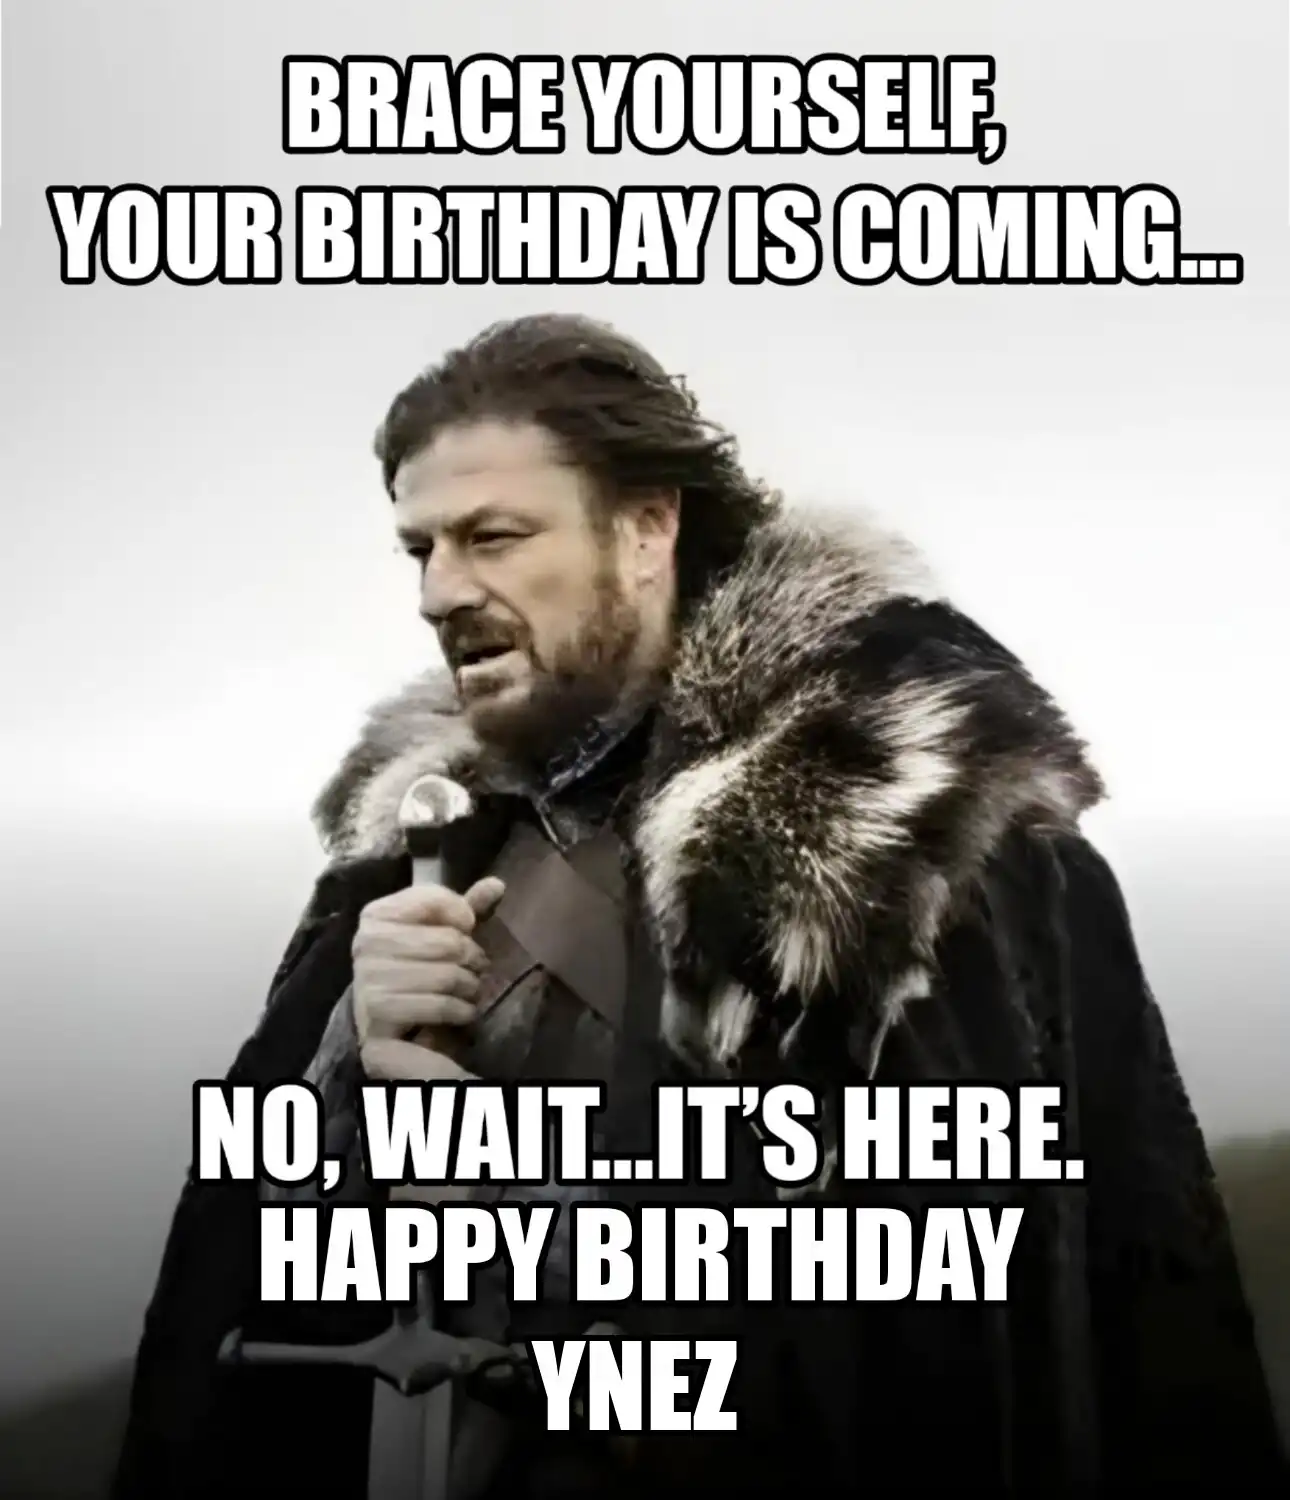 Happy Birthday Ynez Brace Yourself Your Birthday Is Coming Meme